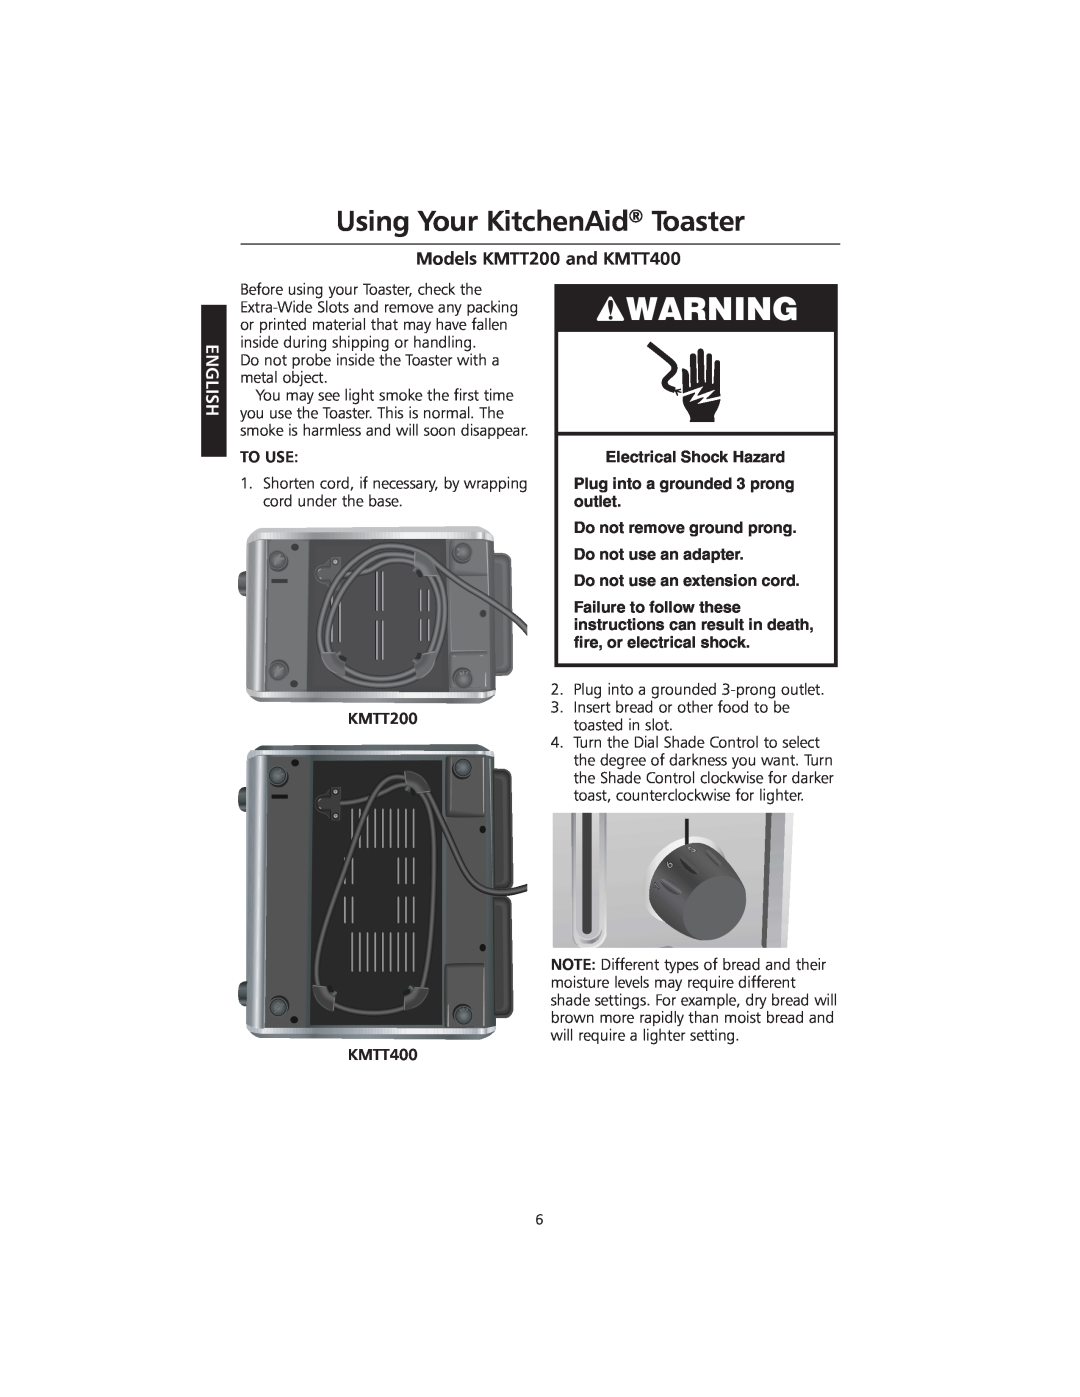 KitchenAid manual Using Your KitchenAid Toaster, Models KMTT200 and KMTT400, English, Electrical Shock Hazard 